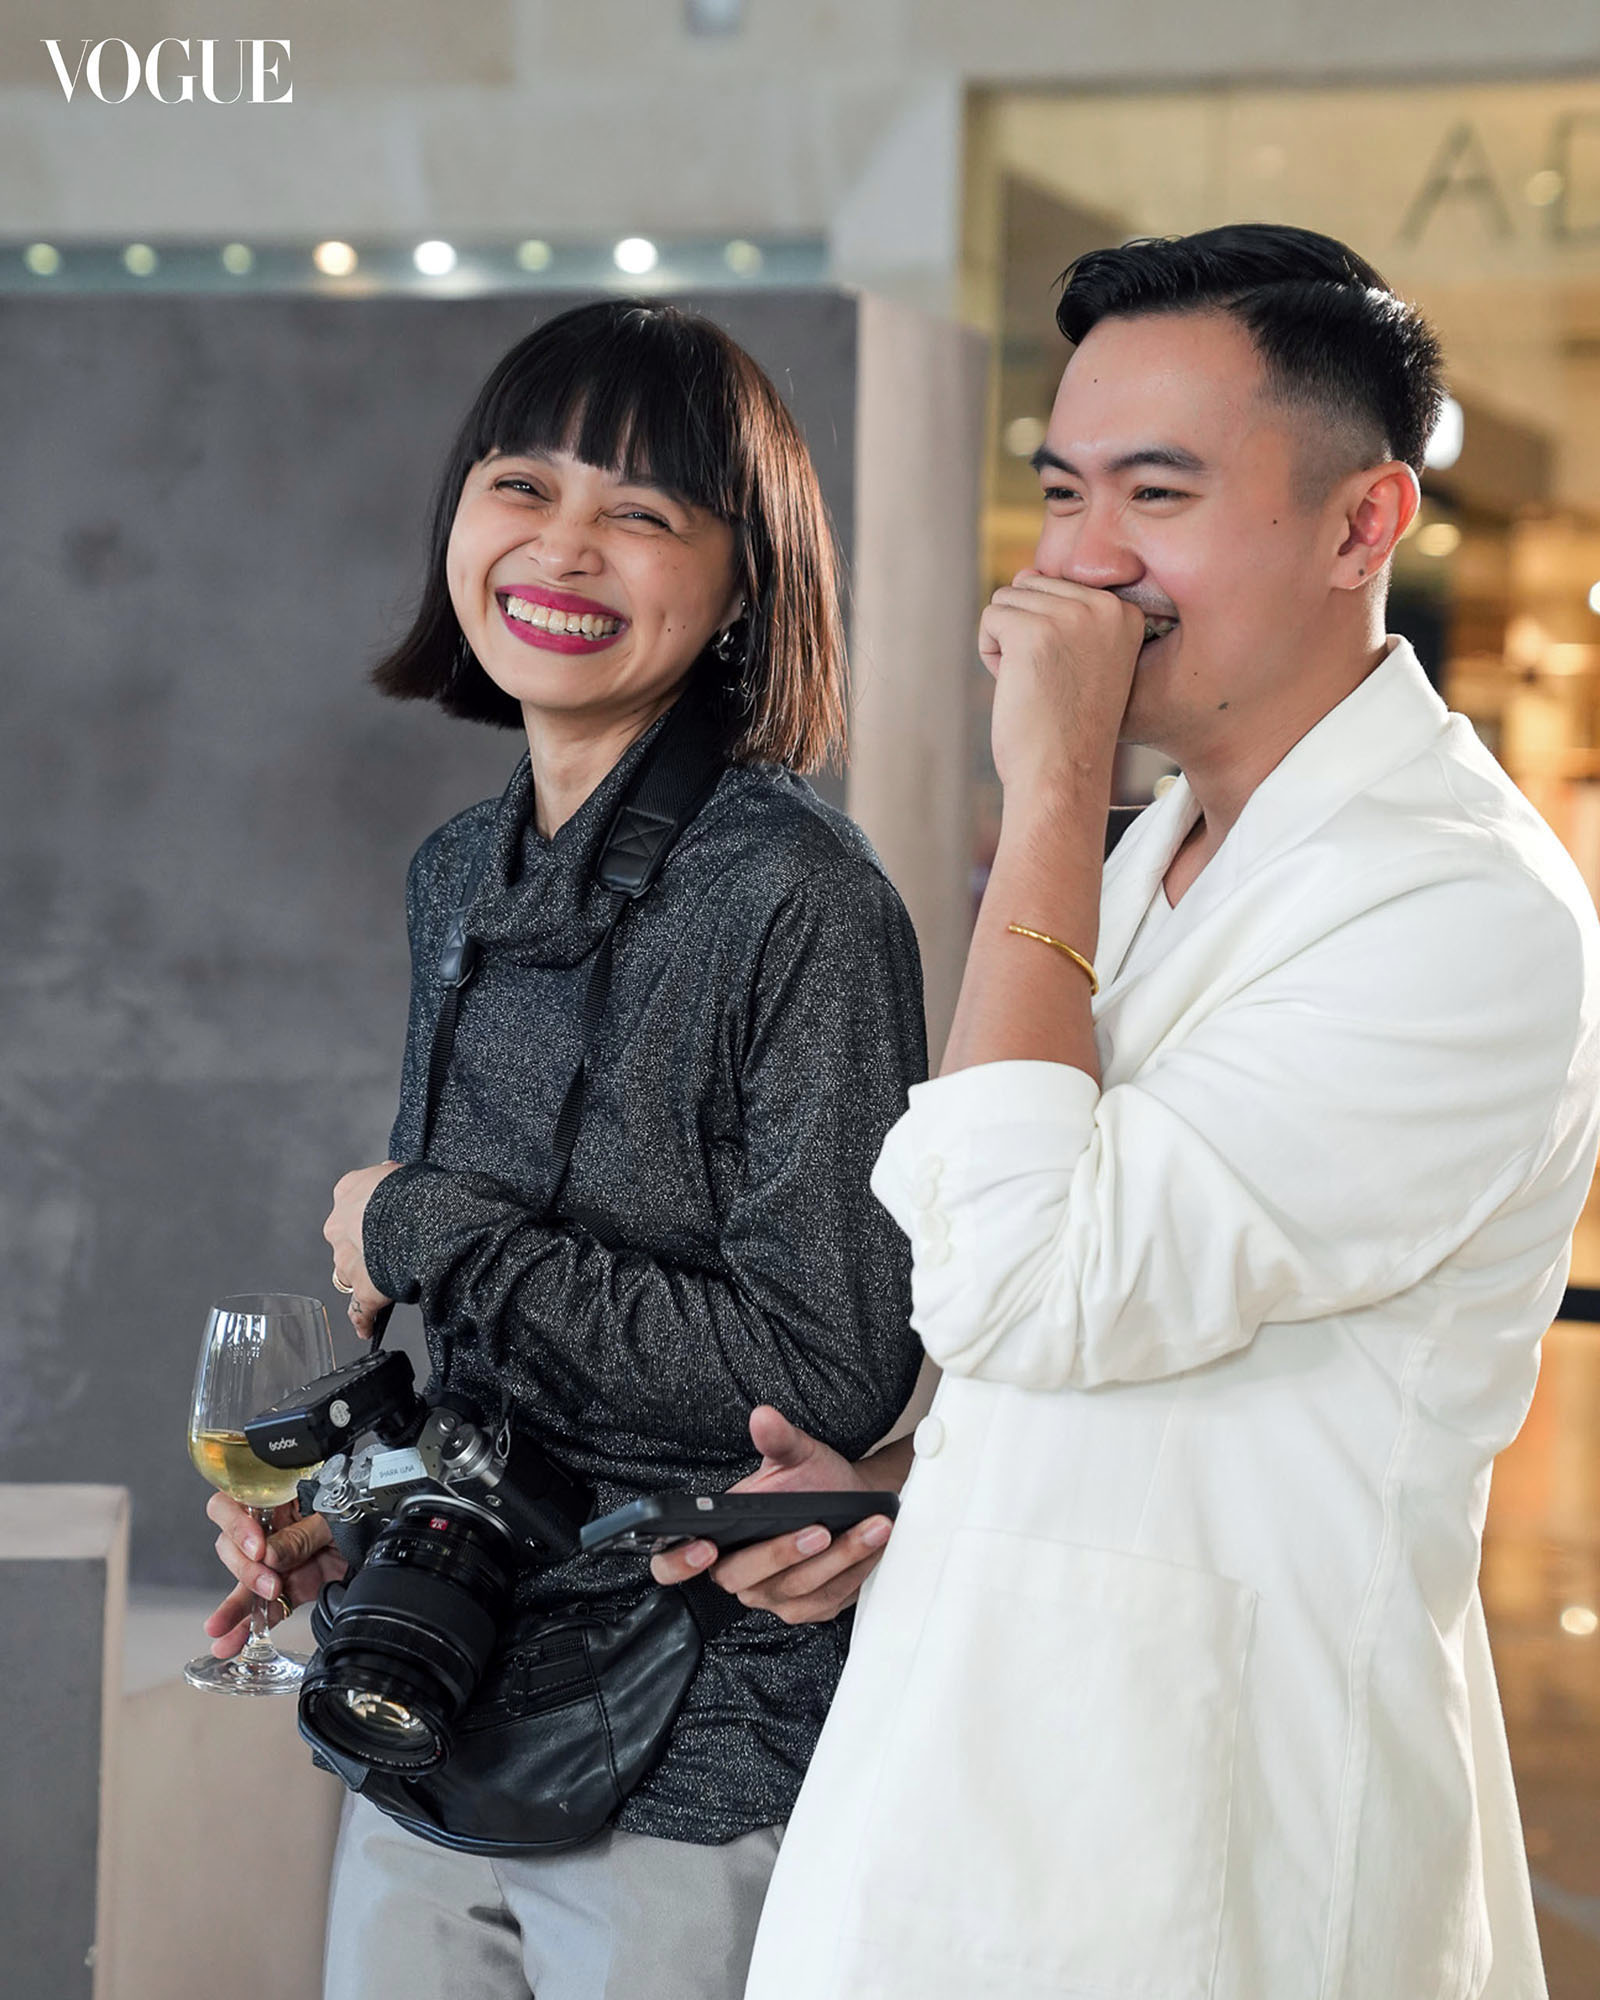 Shaira Luna and Vogue Philippines art director Jann Pascua hosted a portrait session at the Lancôme makeup pocket event